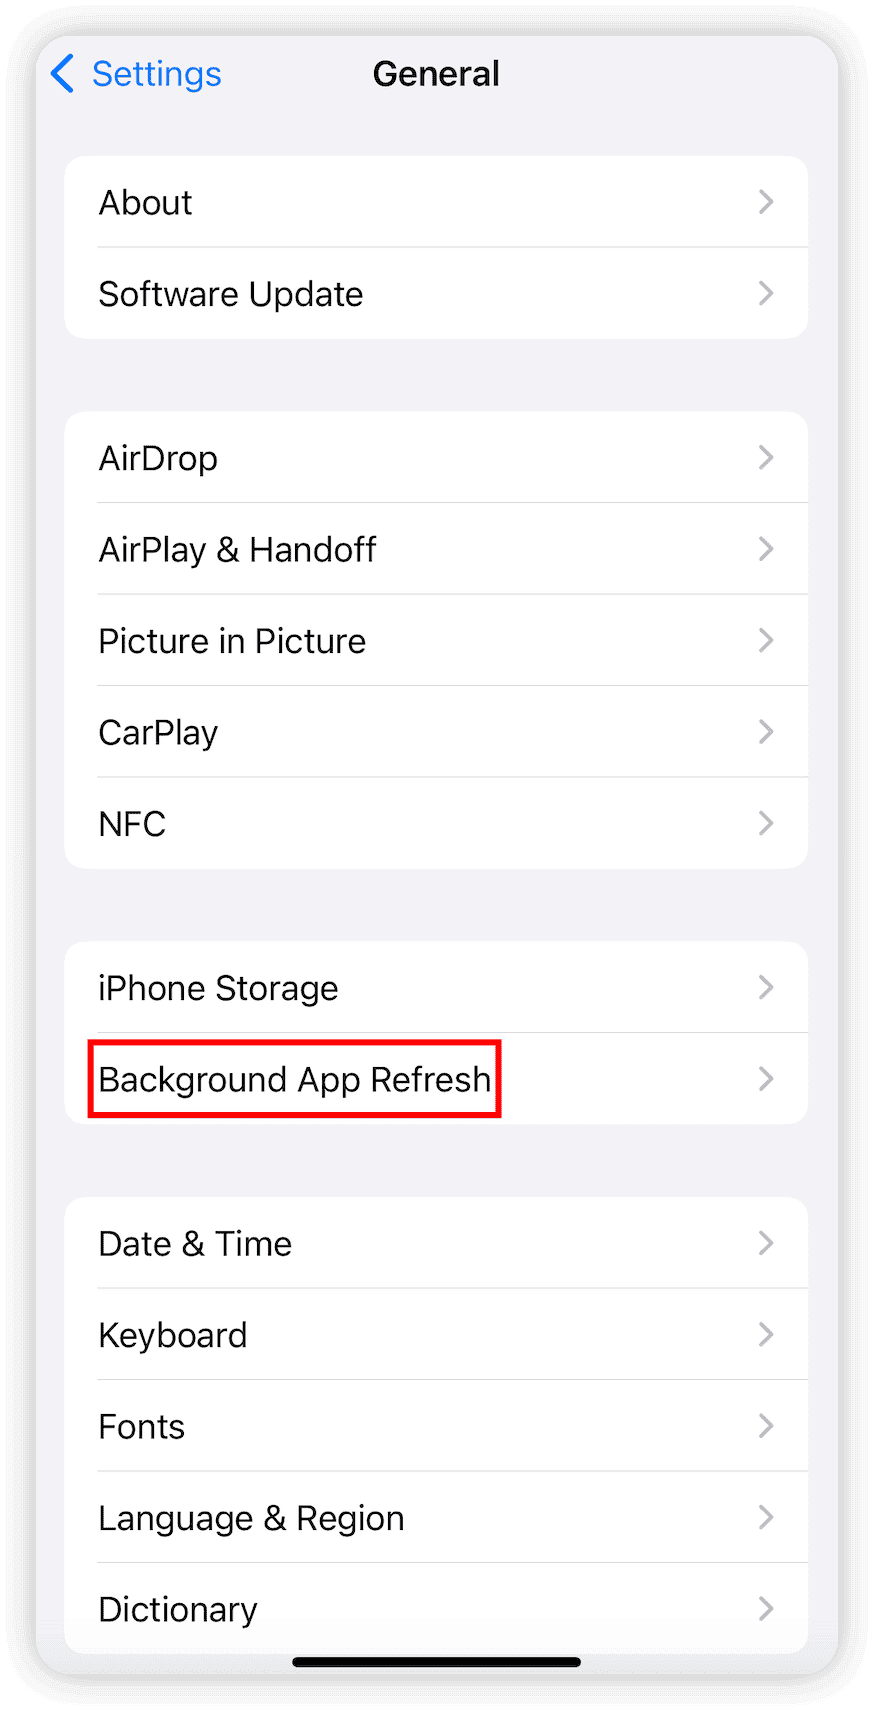 Turn on Background App Refresh